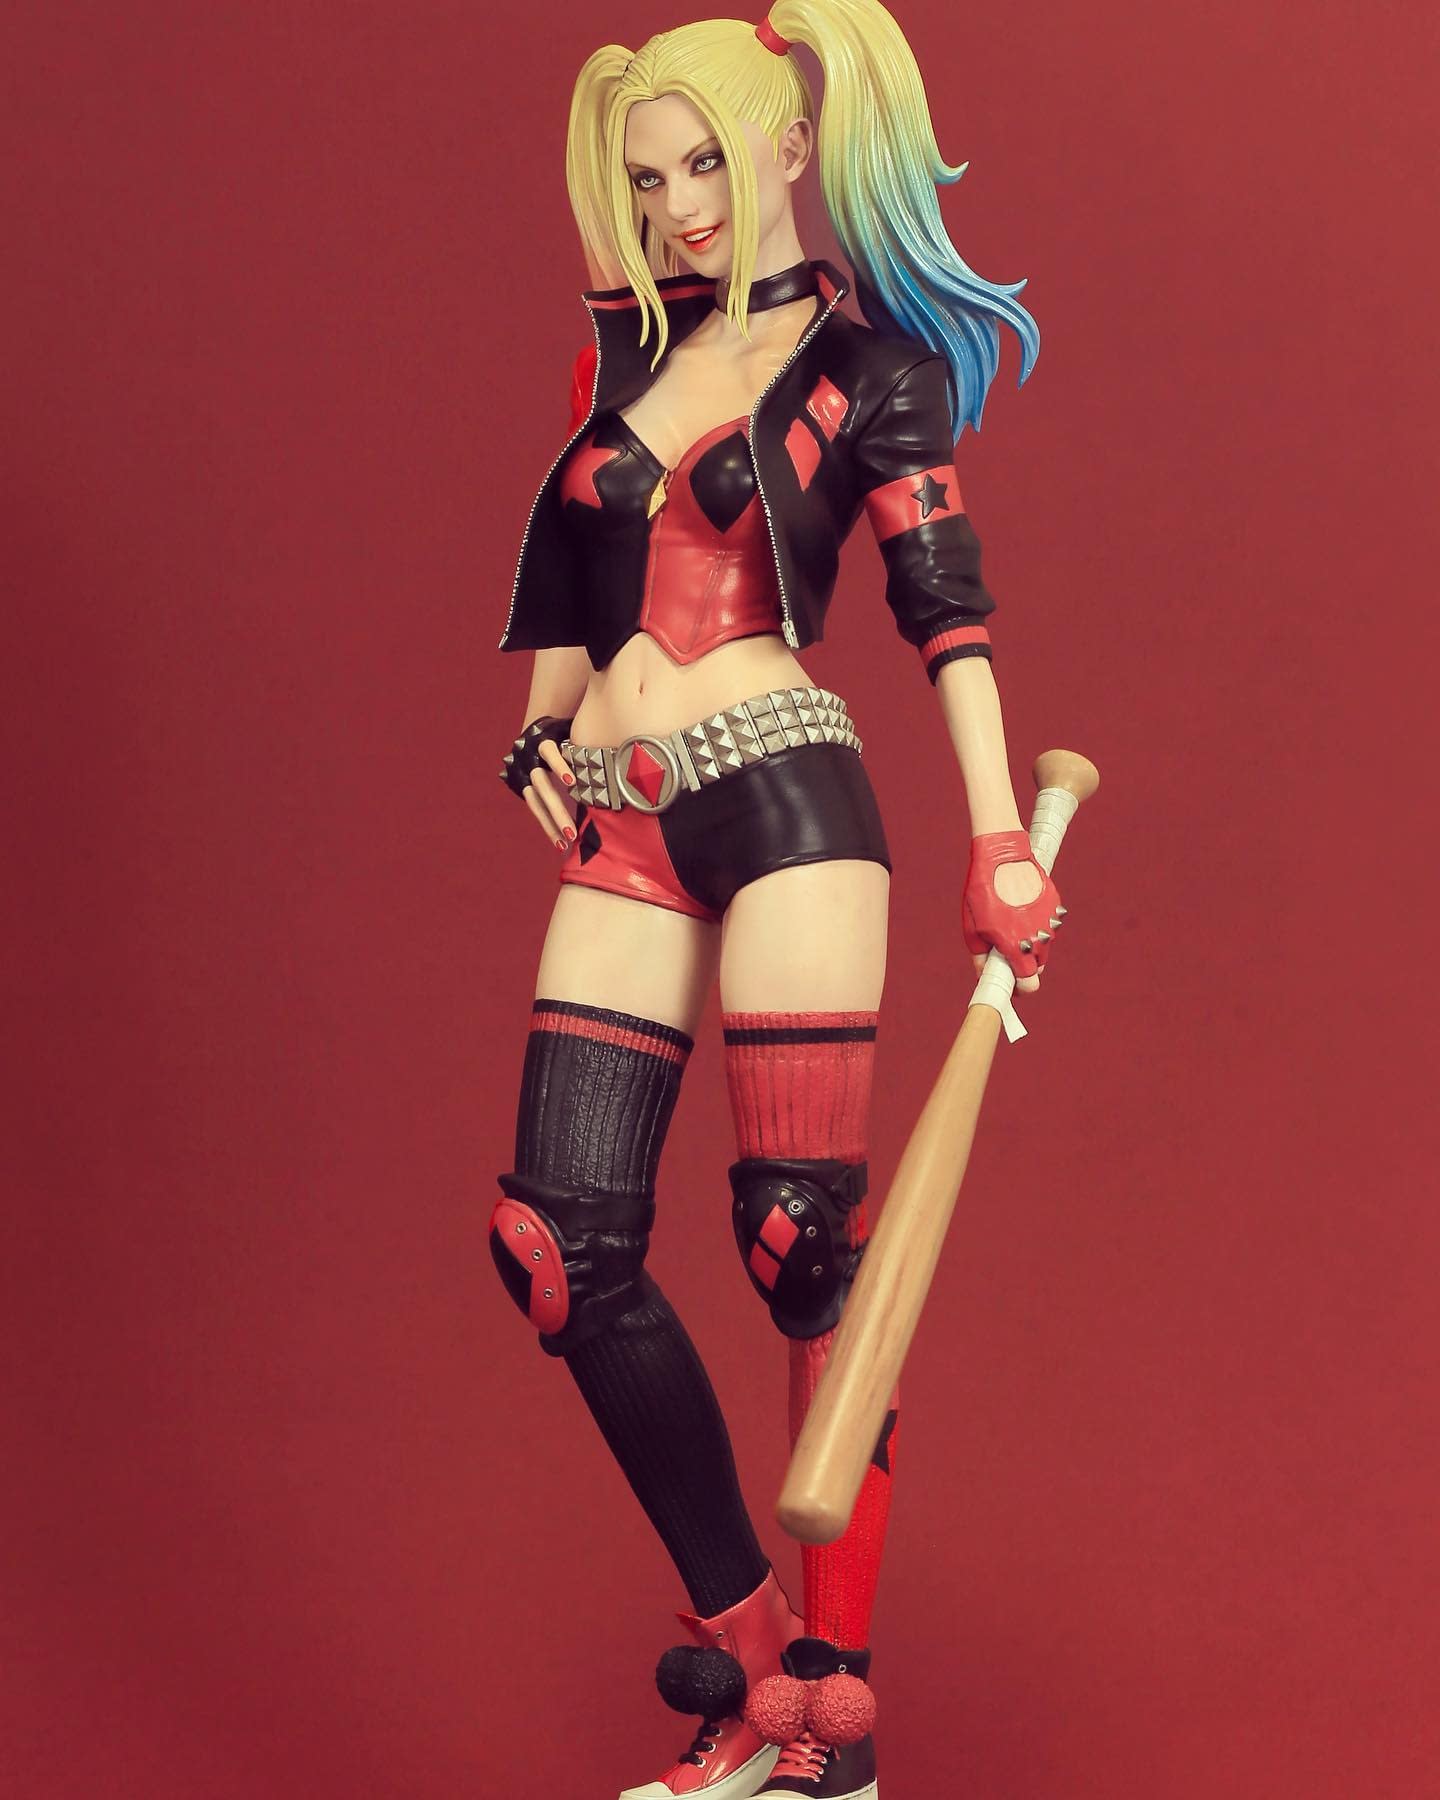 Harley Quinn Kicks Off Kotobukiya's New Kalā Statue Series